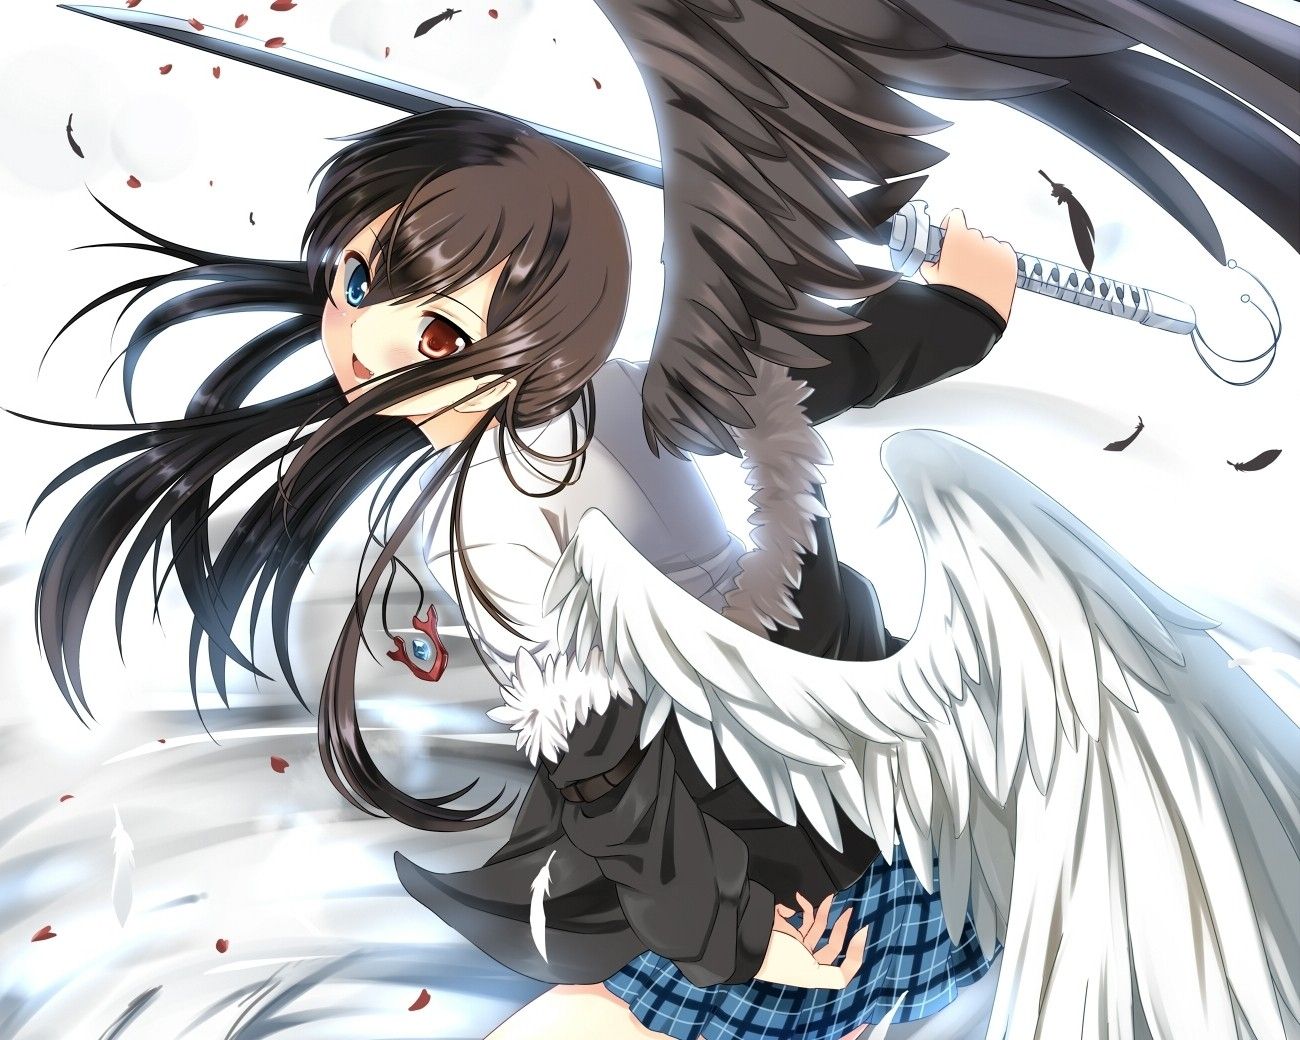 wings weapons feathers fantasy art heterochromia seifuku anime girls black hair 1300x1040 wallpap High Quality Wallpaper, High Definition Wallpaper